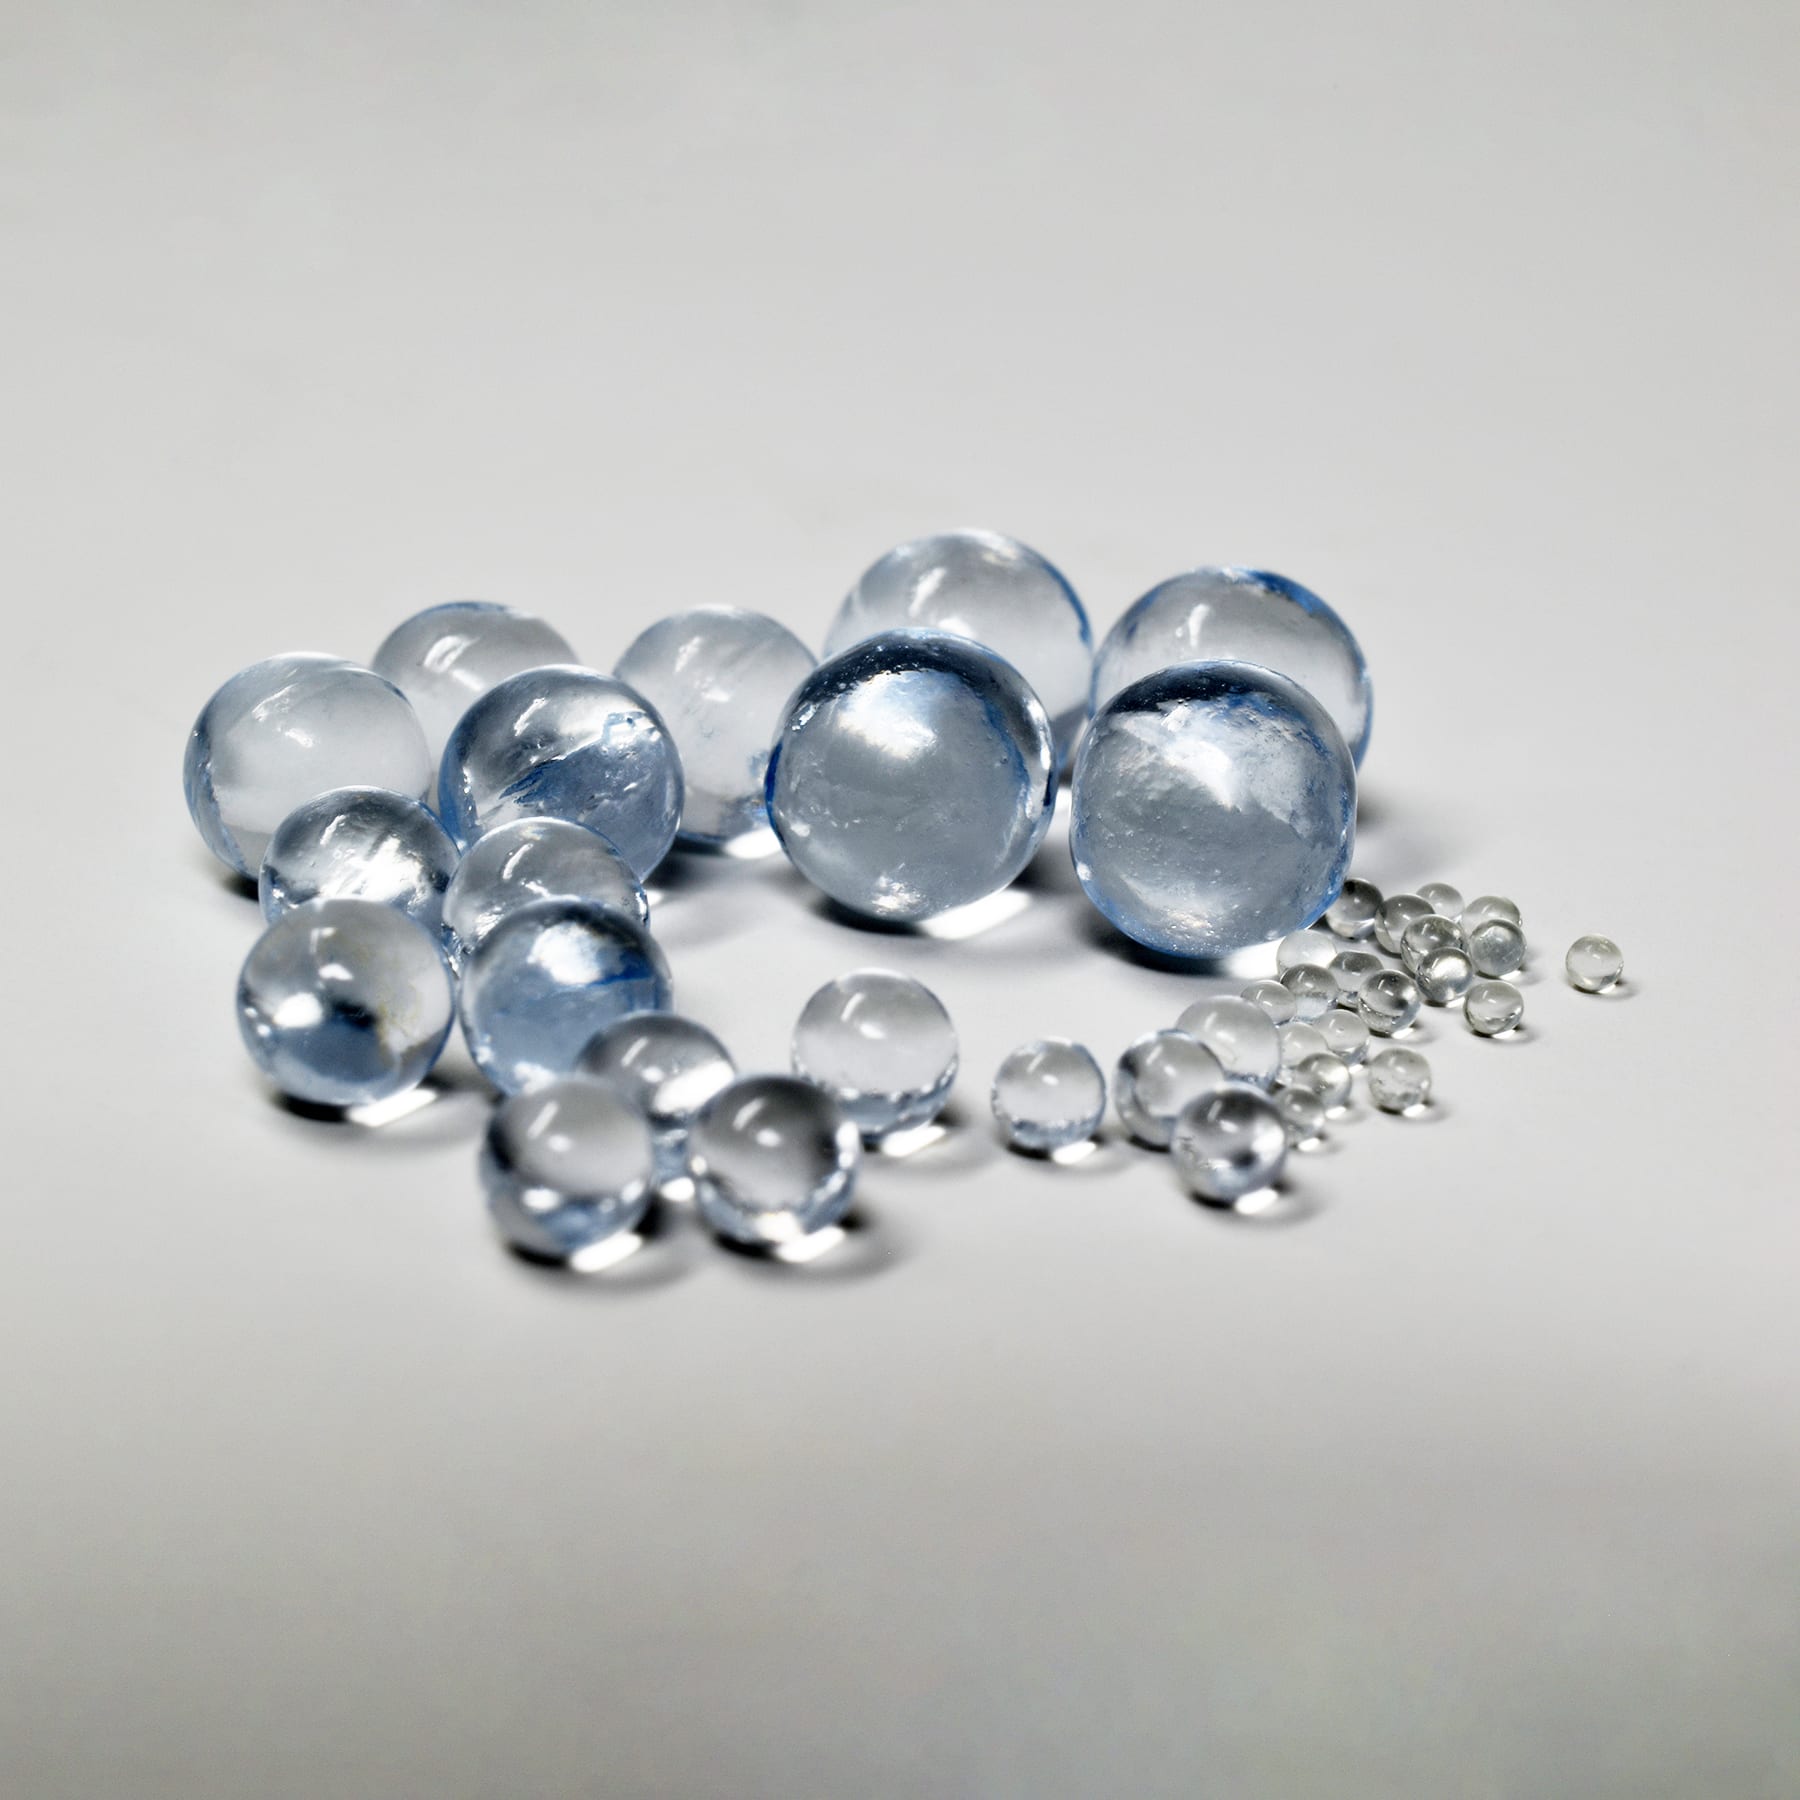 Northwest Scientific Inc. - 89001-516, VAN/89001-516 - Glass Beads 4mm  pack/1lb - Northwest Scientific, Inc.